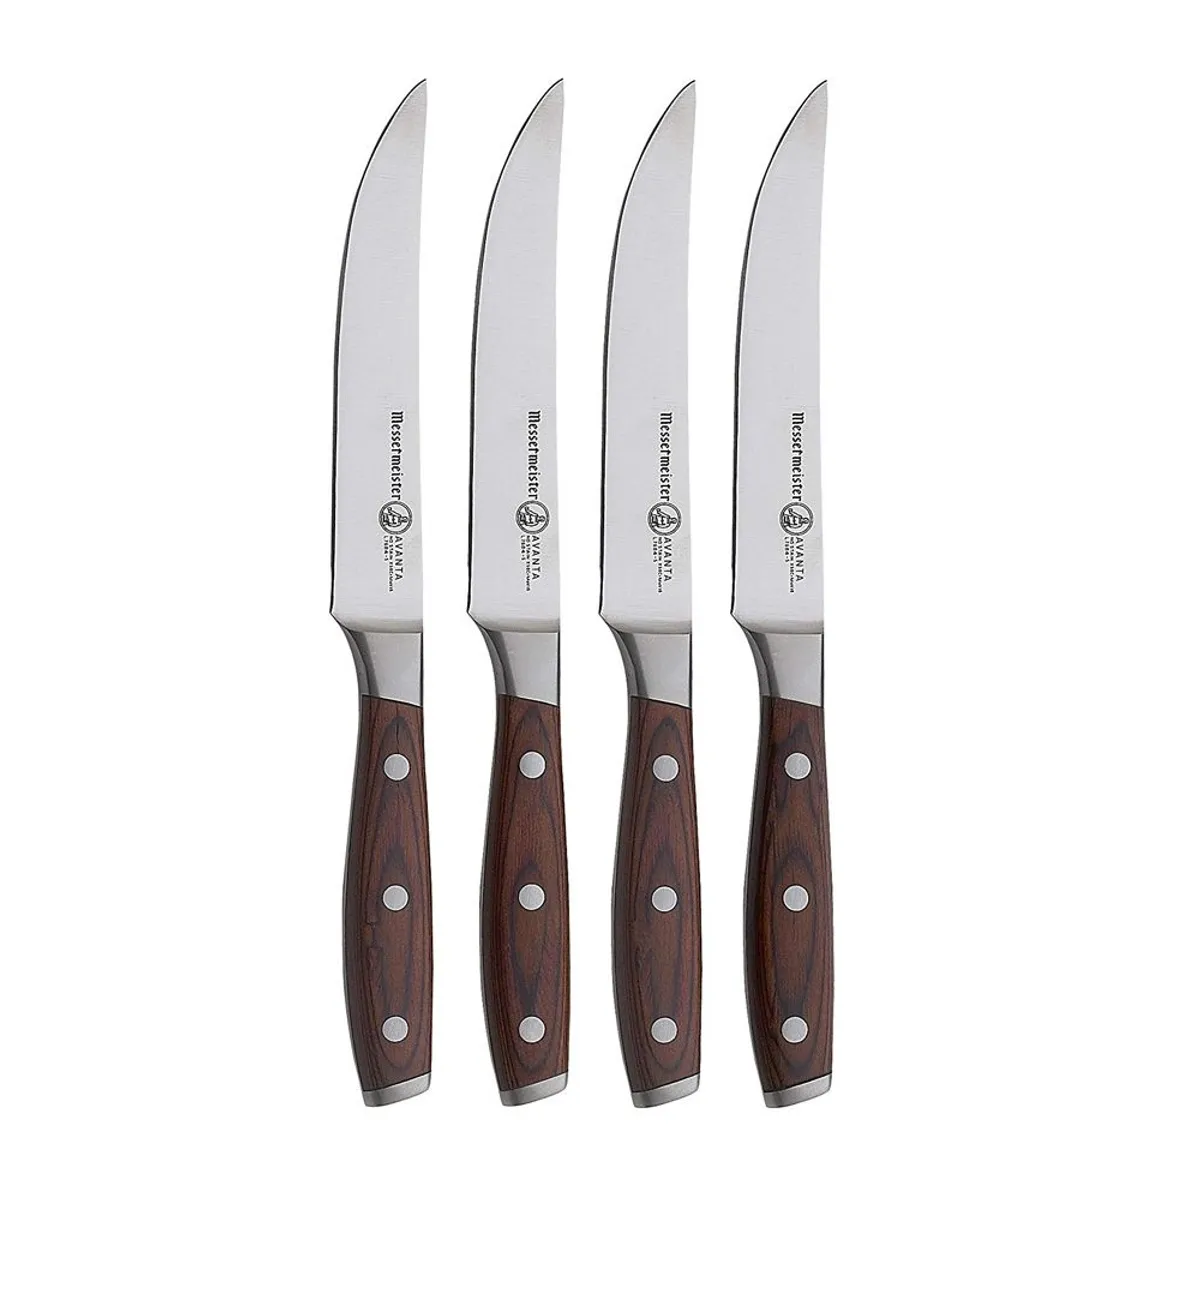 Messermeister Avanta Steak Knife Set review